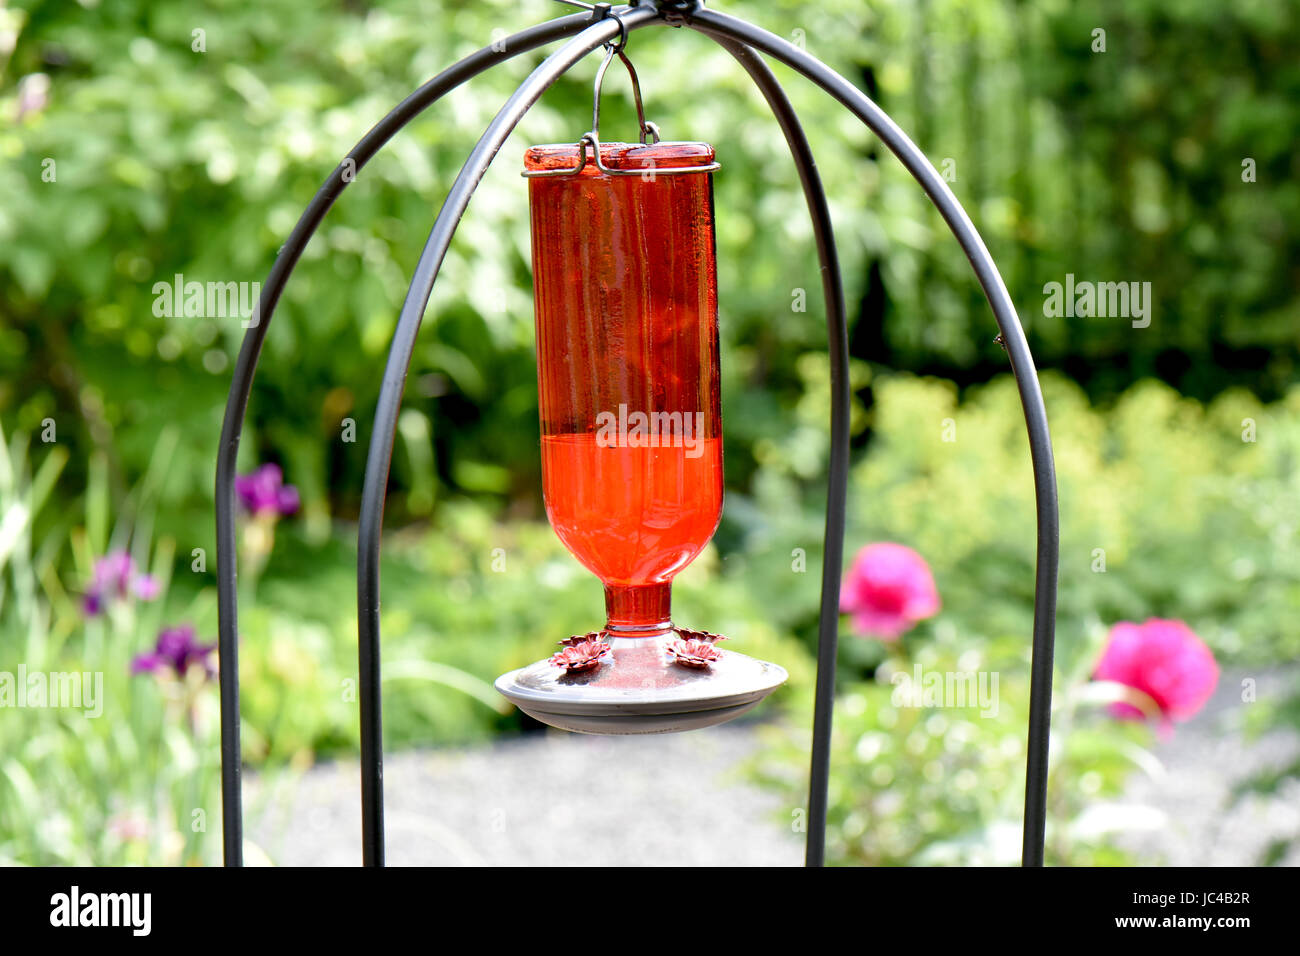 Brilliant crimson feeder filled with sugar water lures hummingbirds into a garden. Stock Photo